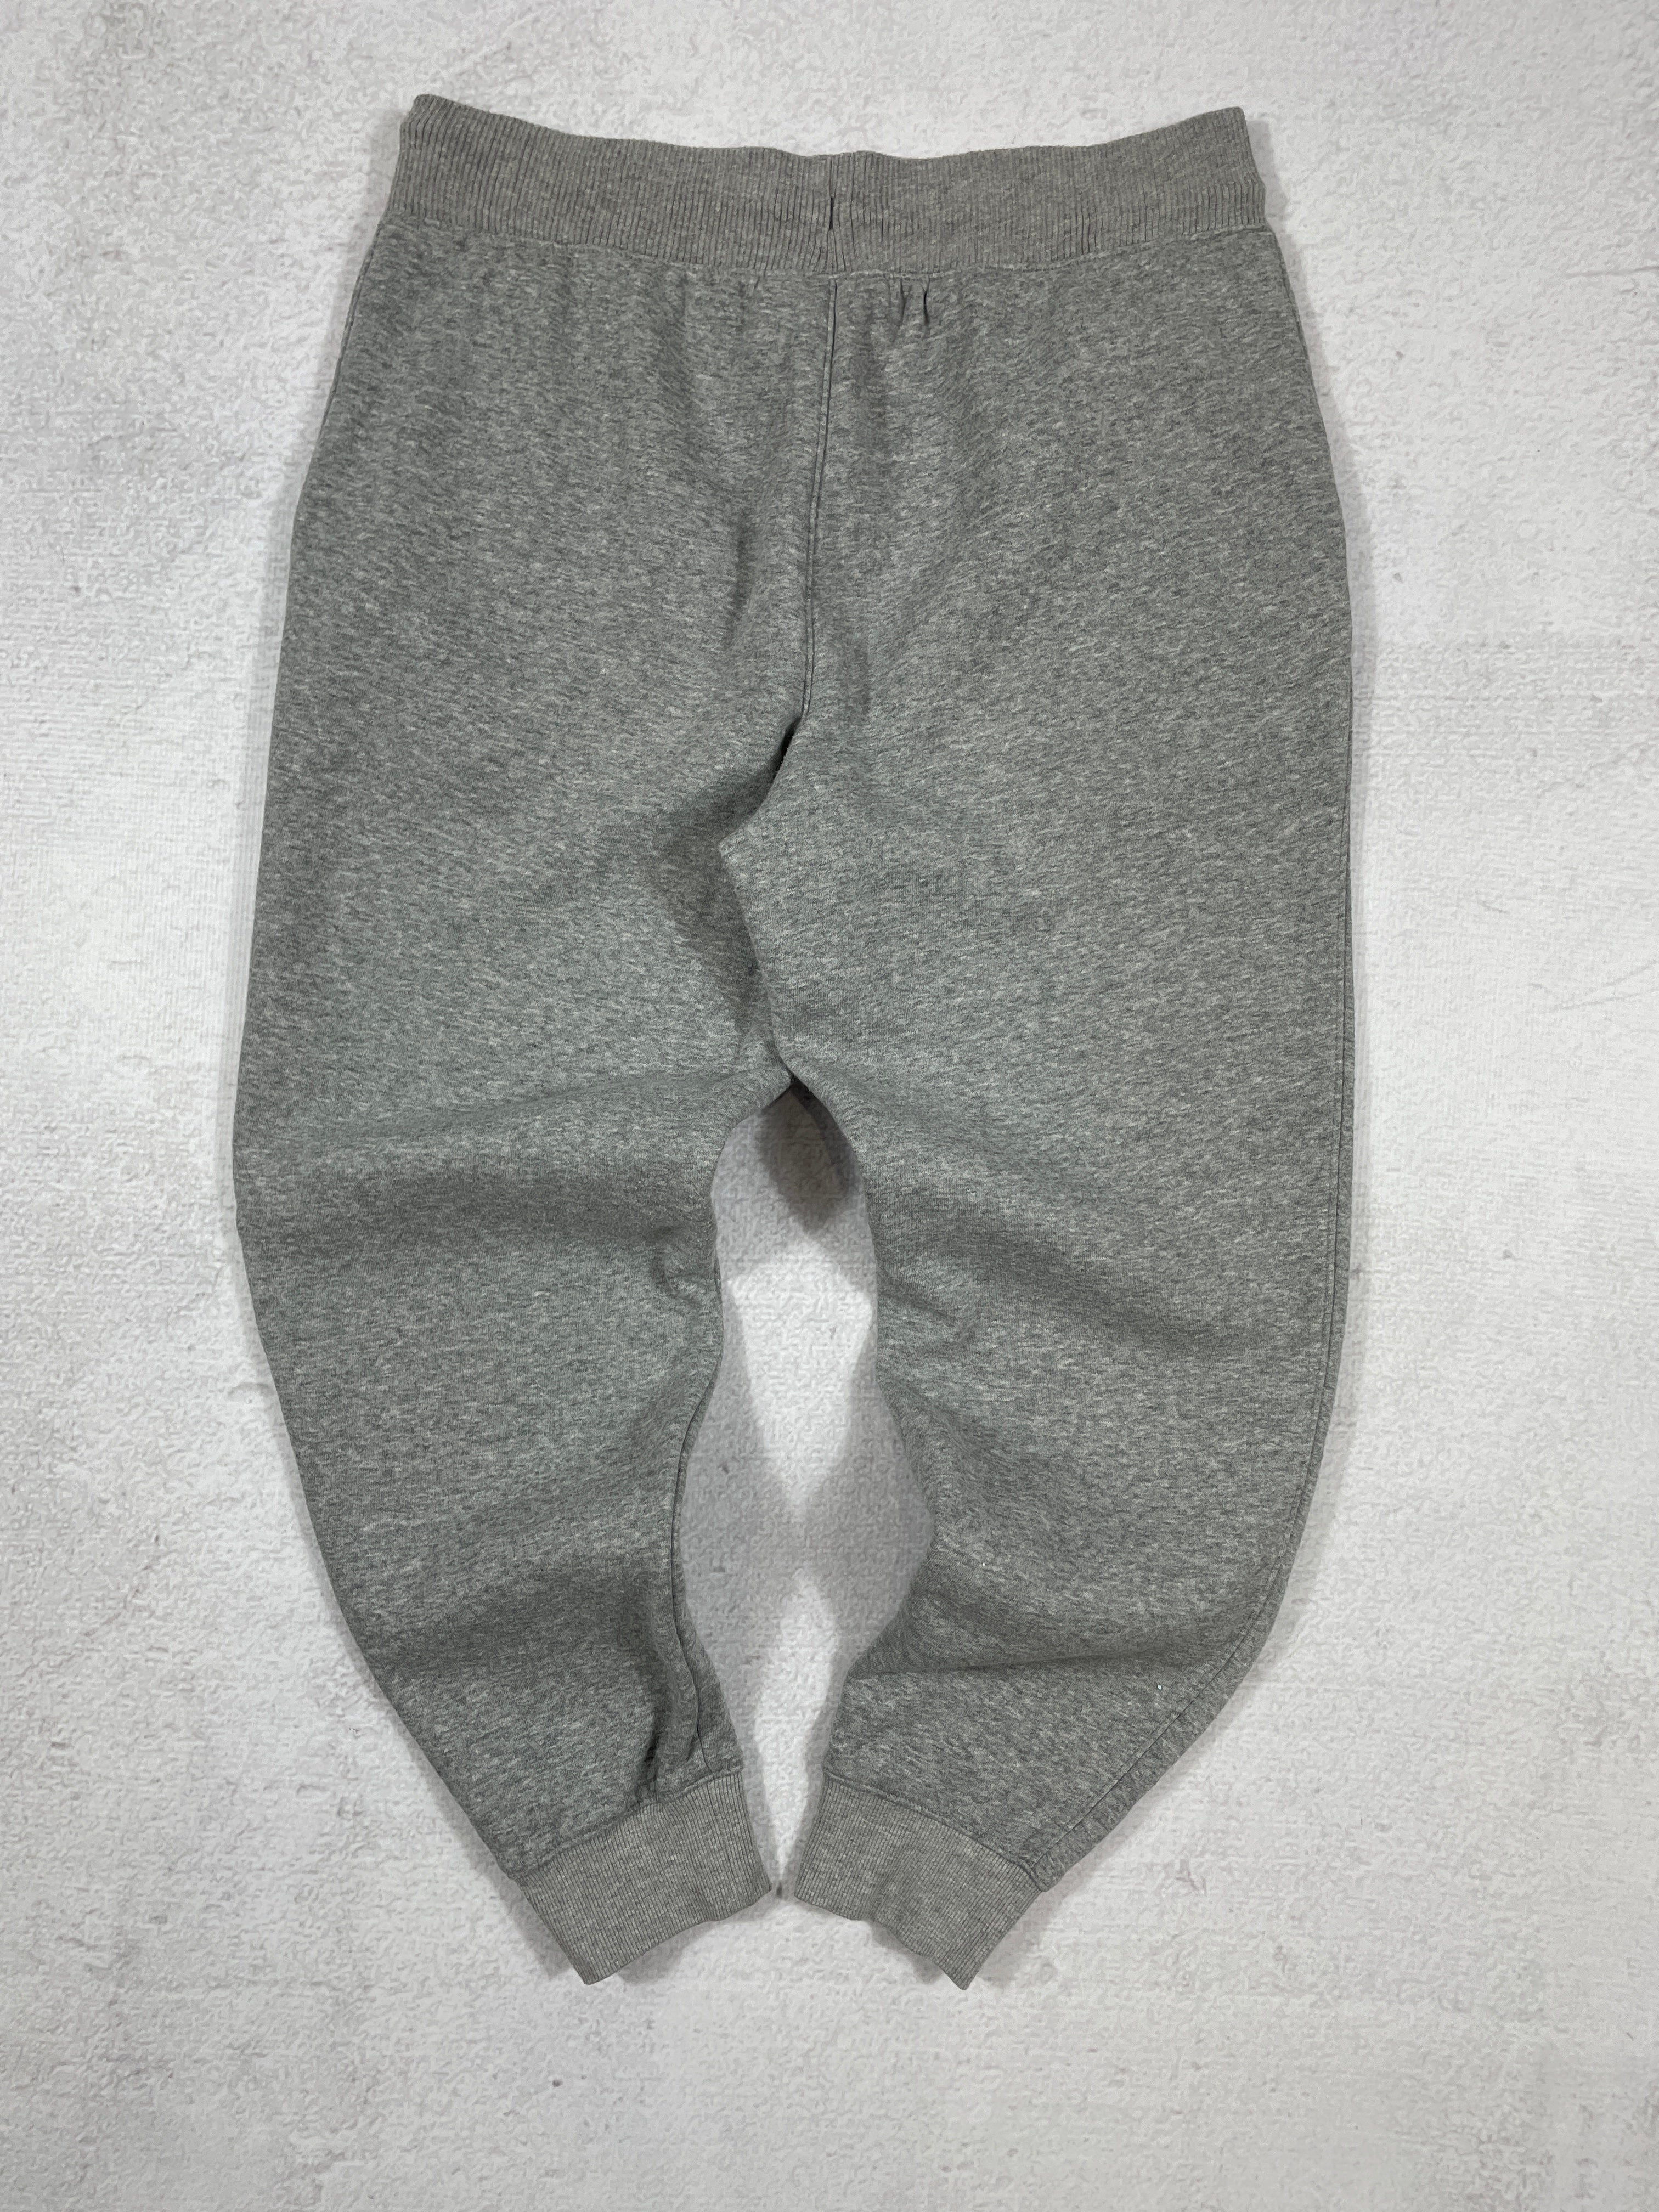 Vintage Fila Cuffed Sweatpants - Women's Large